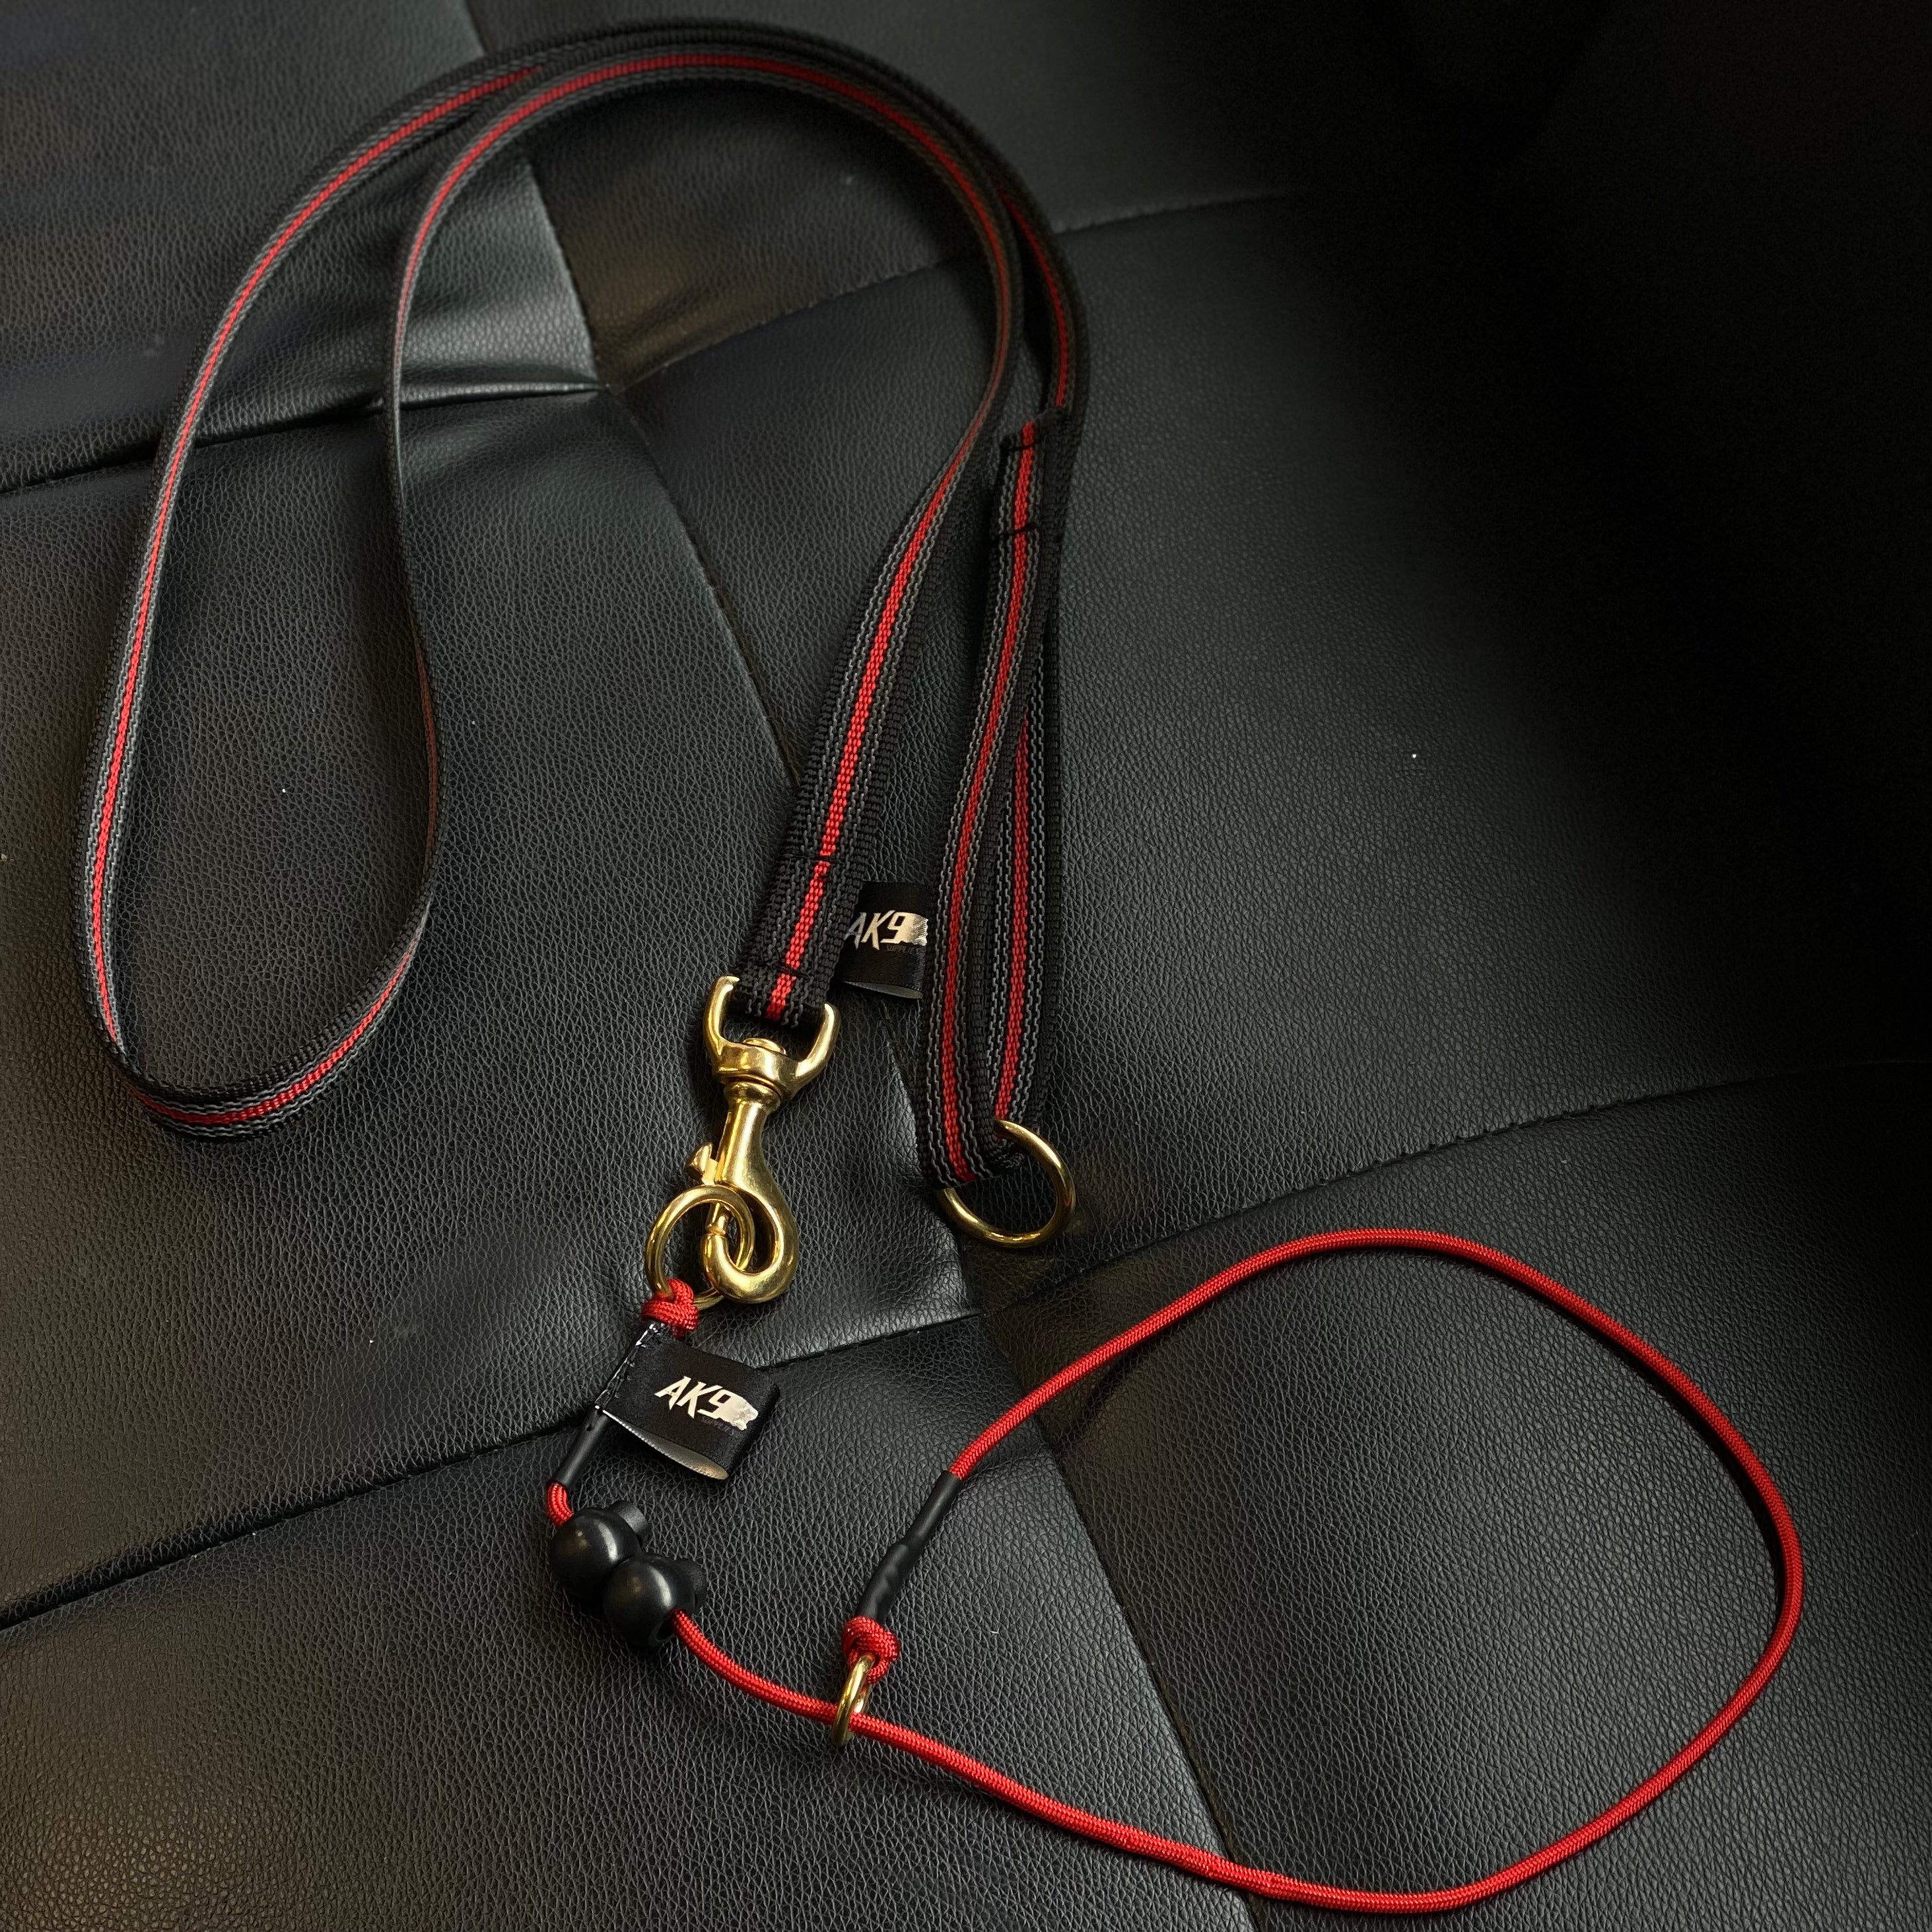 1.5 meter Rubberised Standard Red Lead and Slip collar set